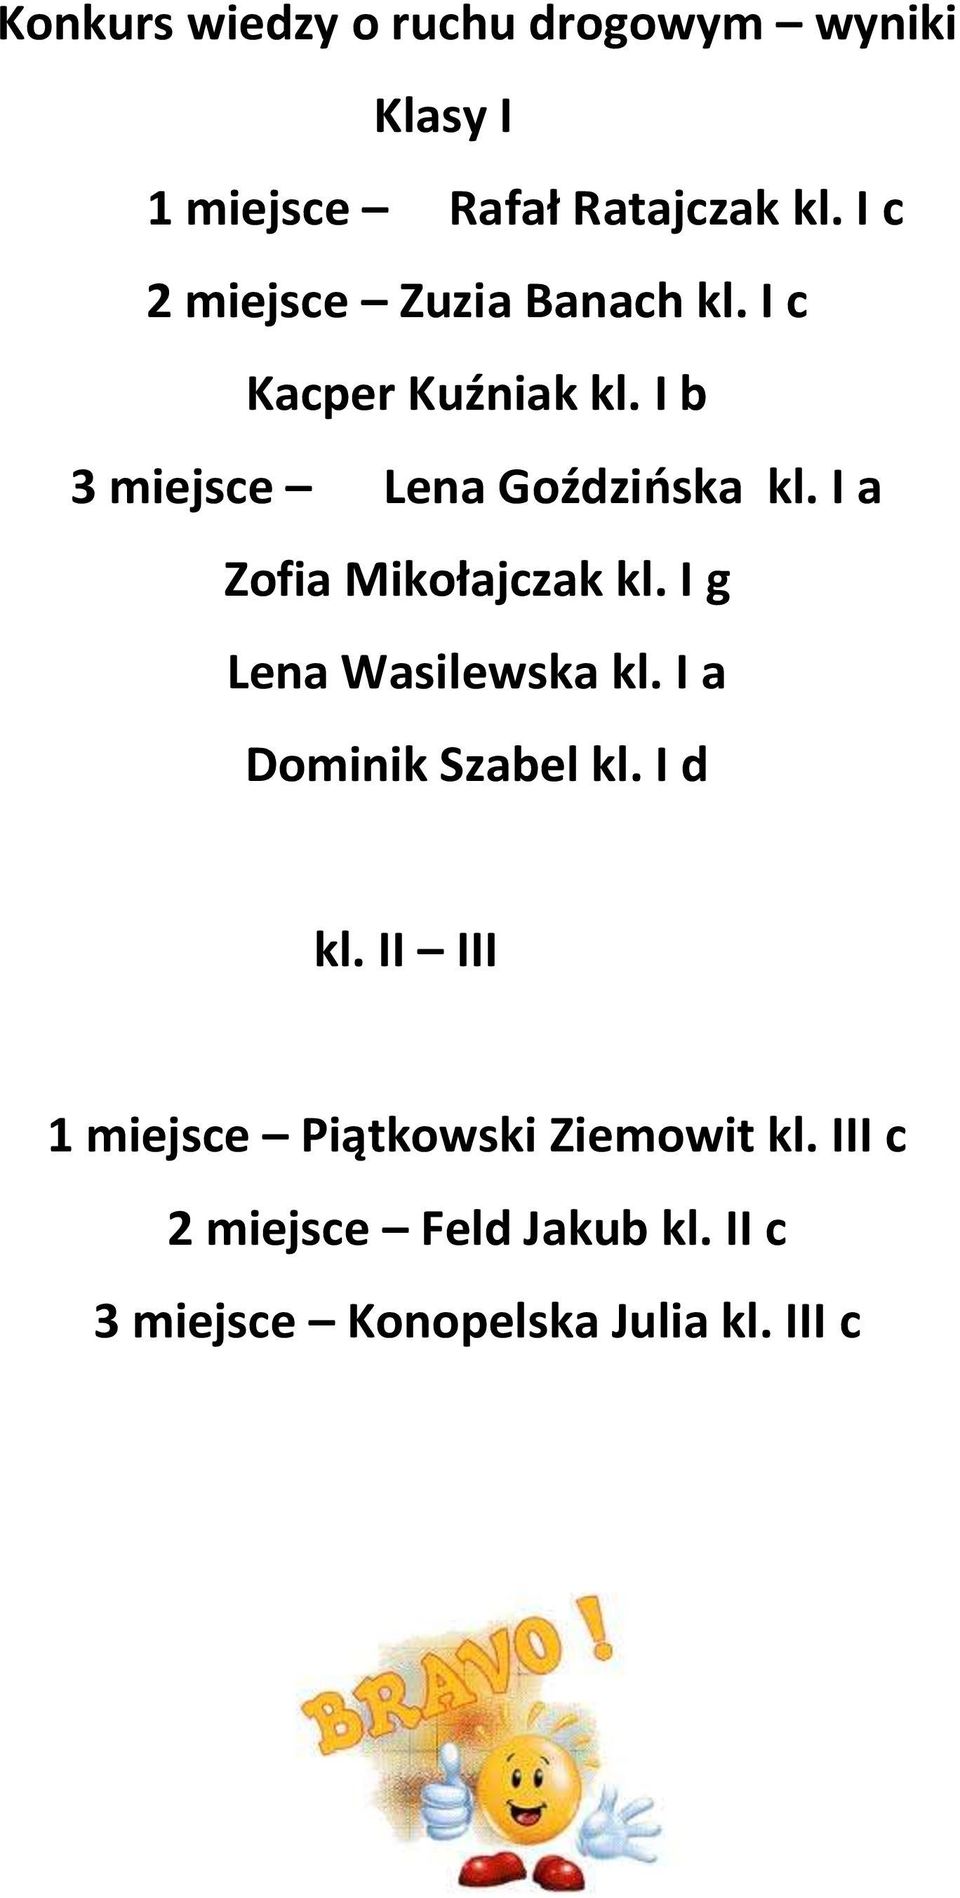 I a Zofia Mikołajczak kl. I g Lena Wasilewska kl. I a Dominik Szabel kl. I d kl.